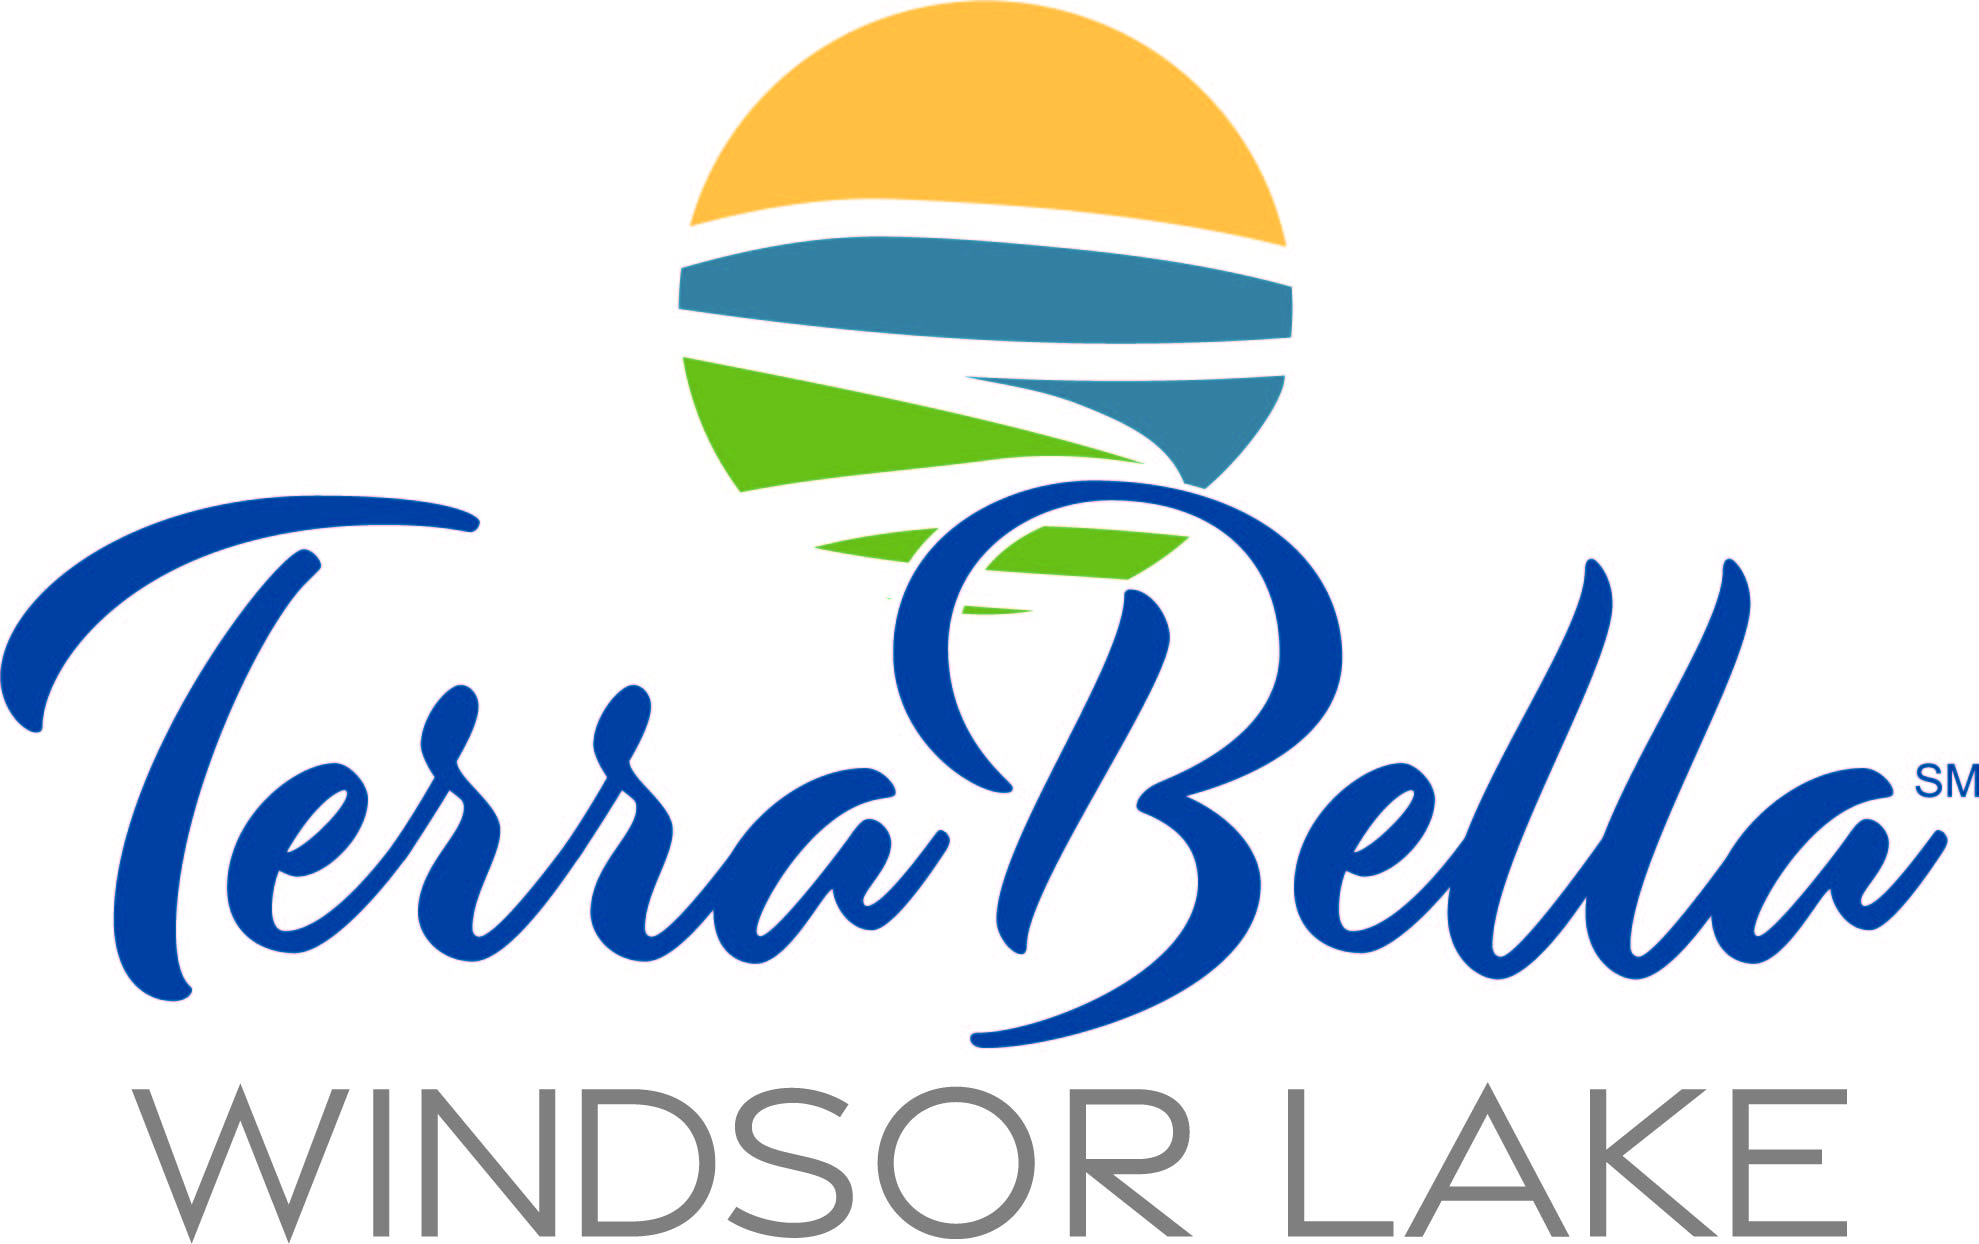 TerraBella Windsor Lakes